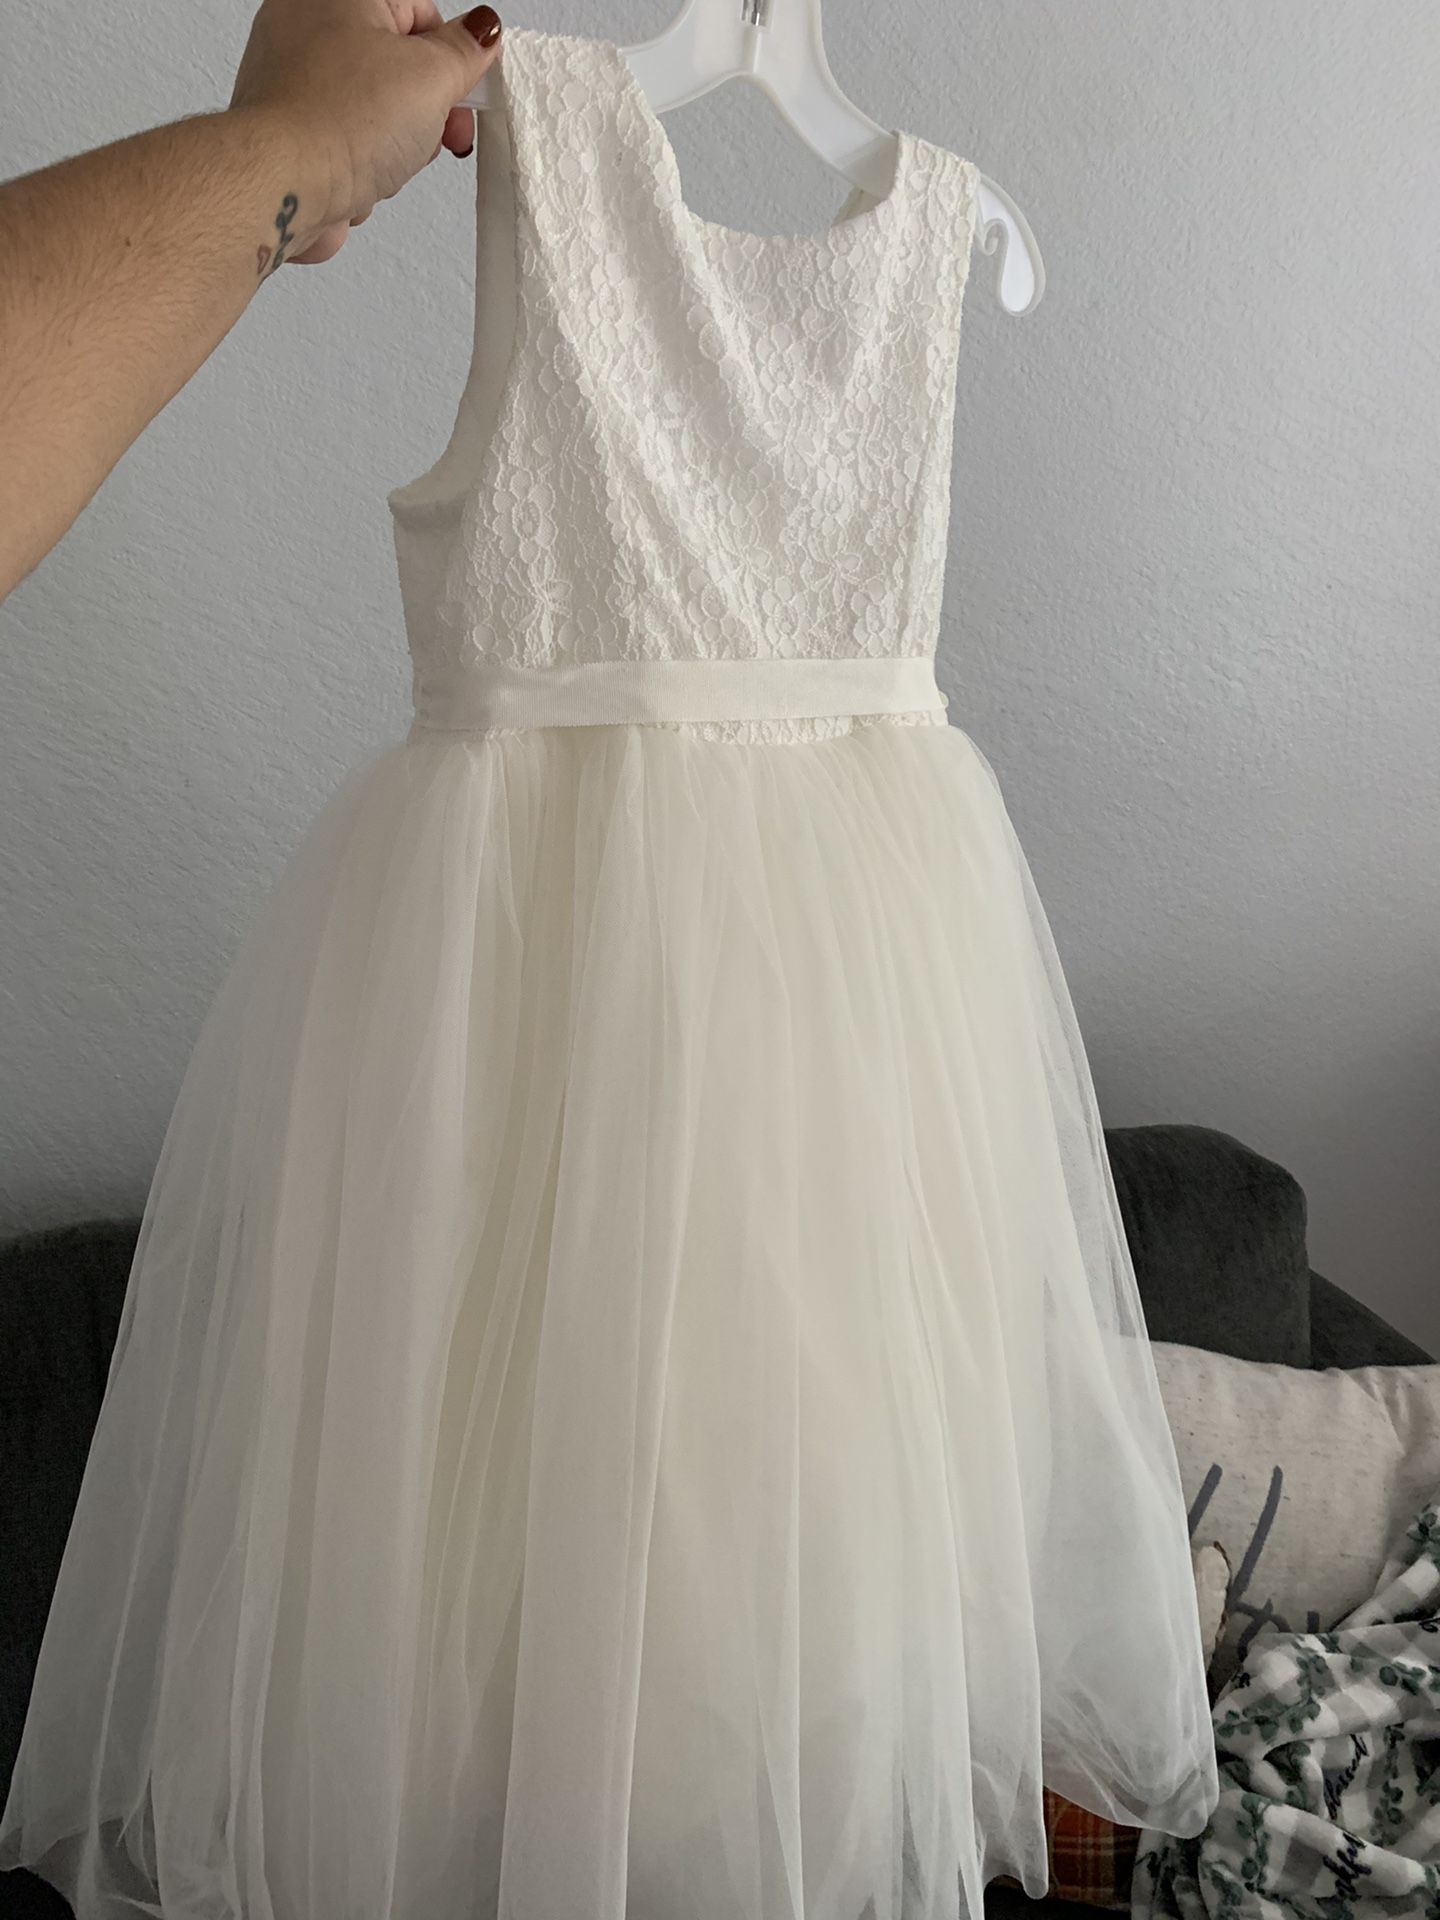 Flower girl wedding dress size 8